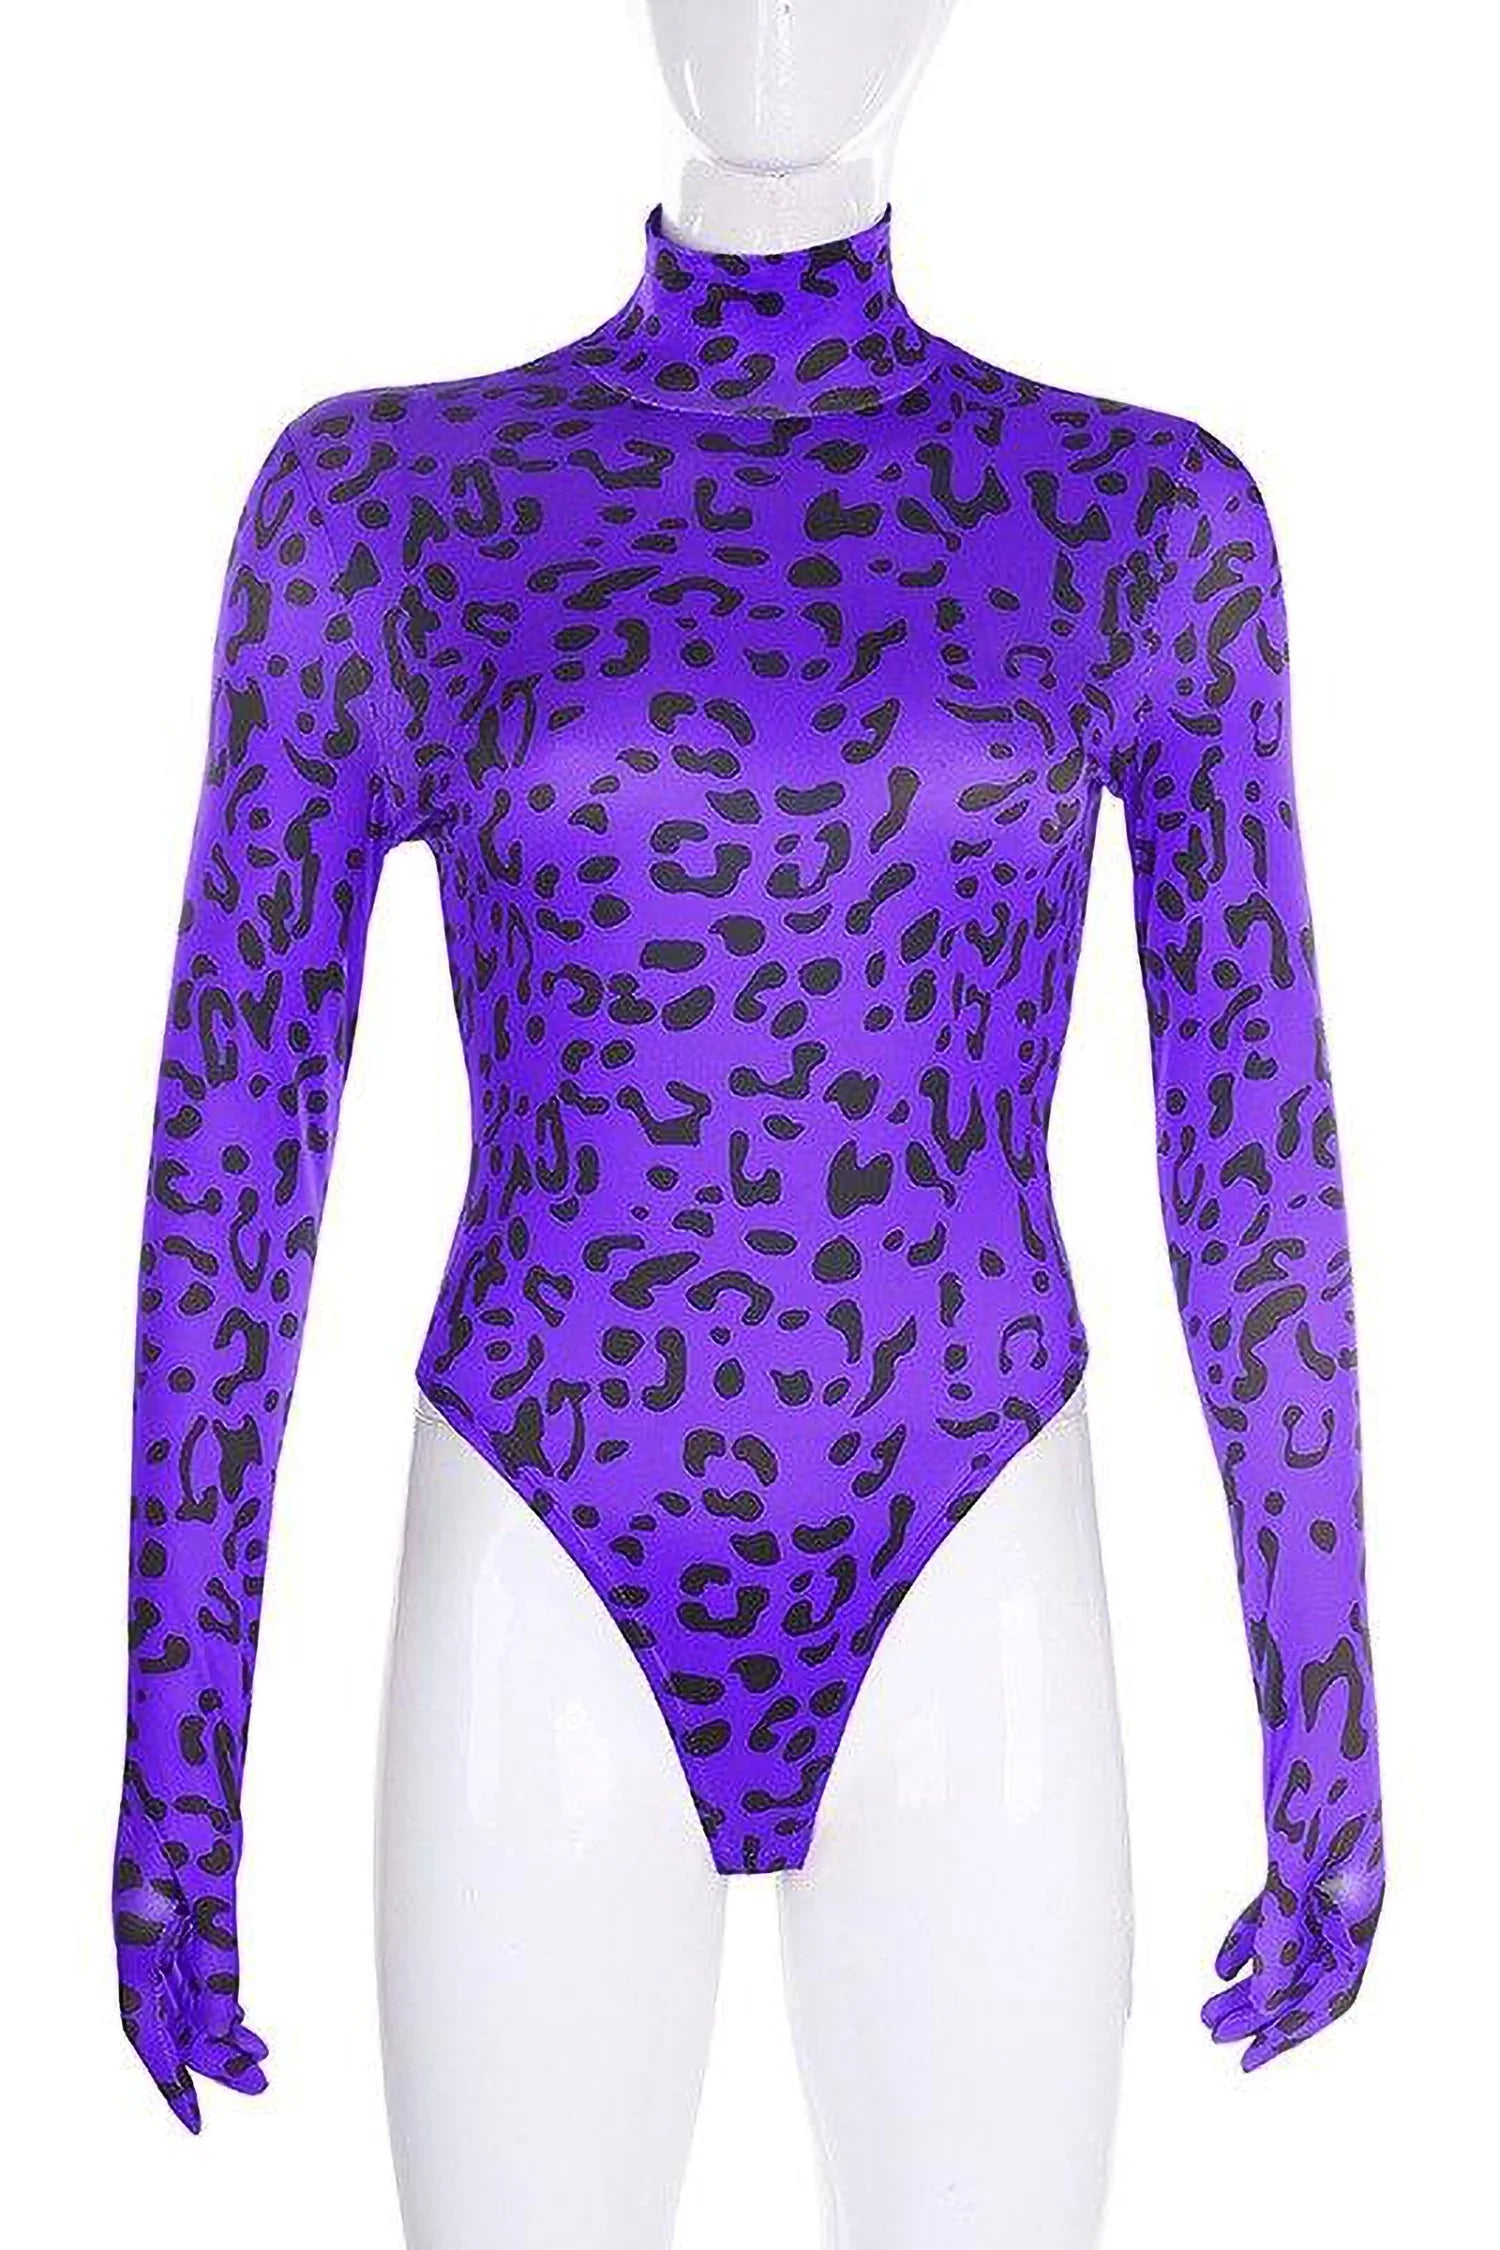 Purple Leopard Print Bodysuit With Gloves